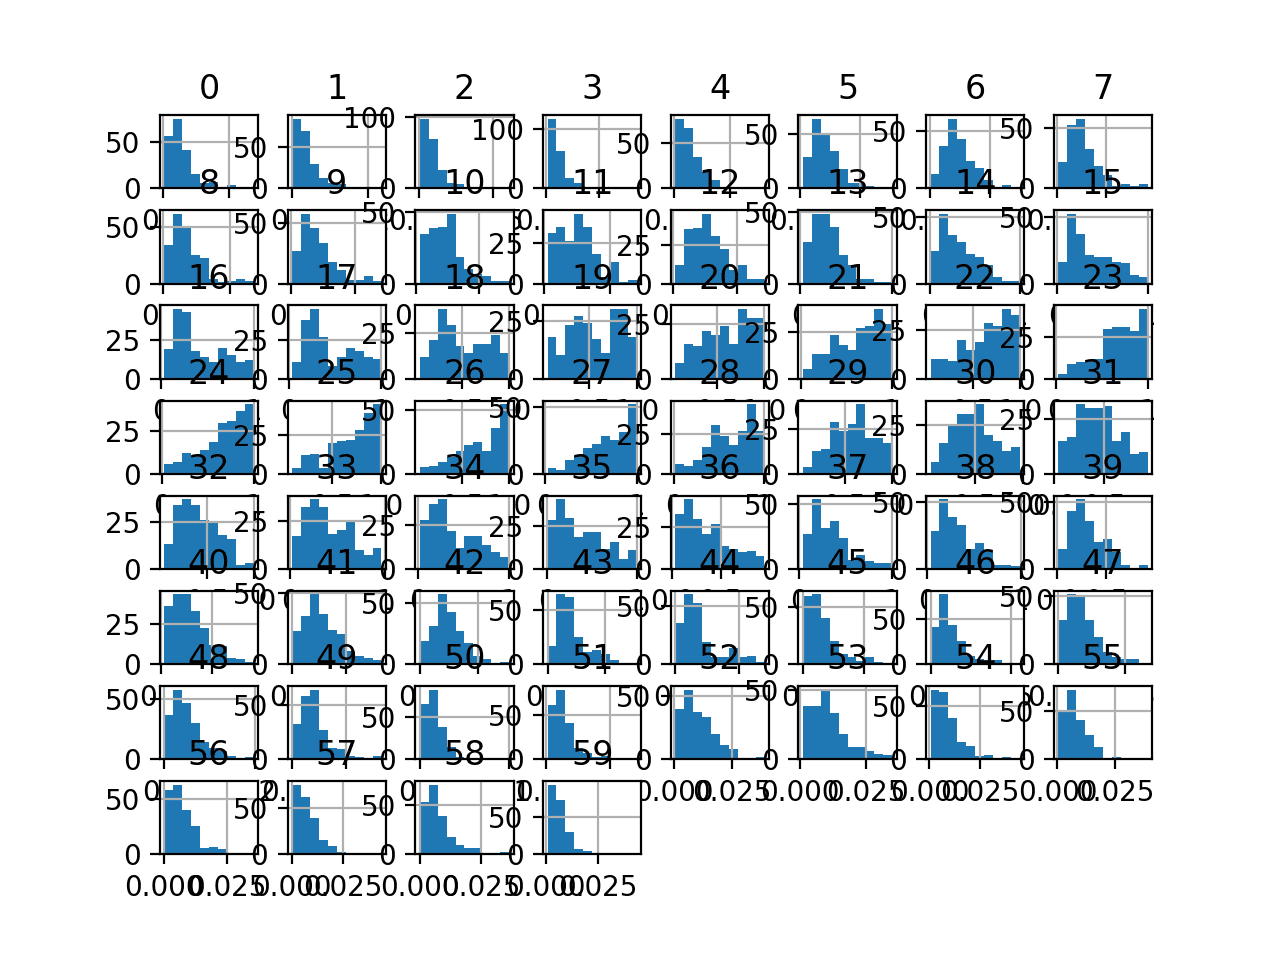 Histogram Plots of Input Variables for the Sonar Binary Classification Dataset